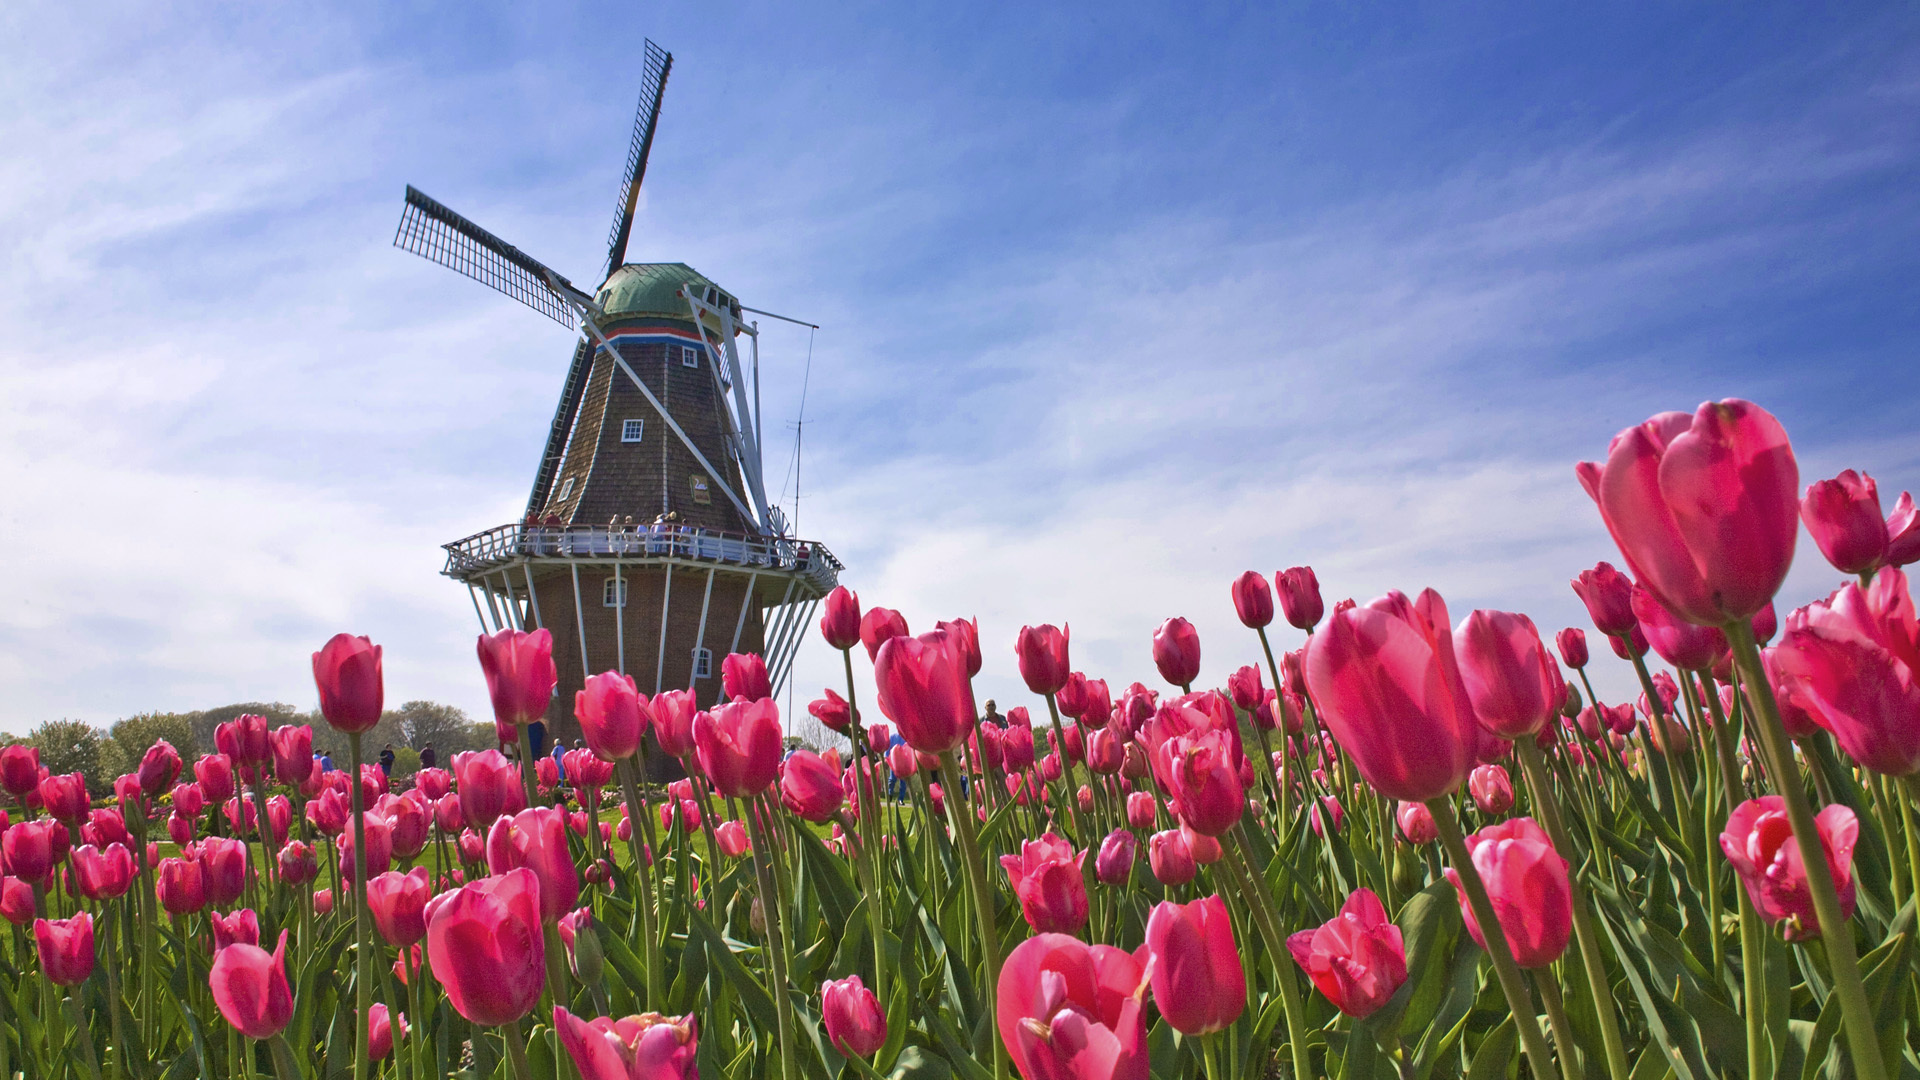 The Herlands Field Tulip Windmill Wallpaper